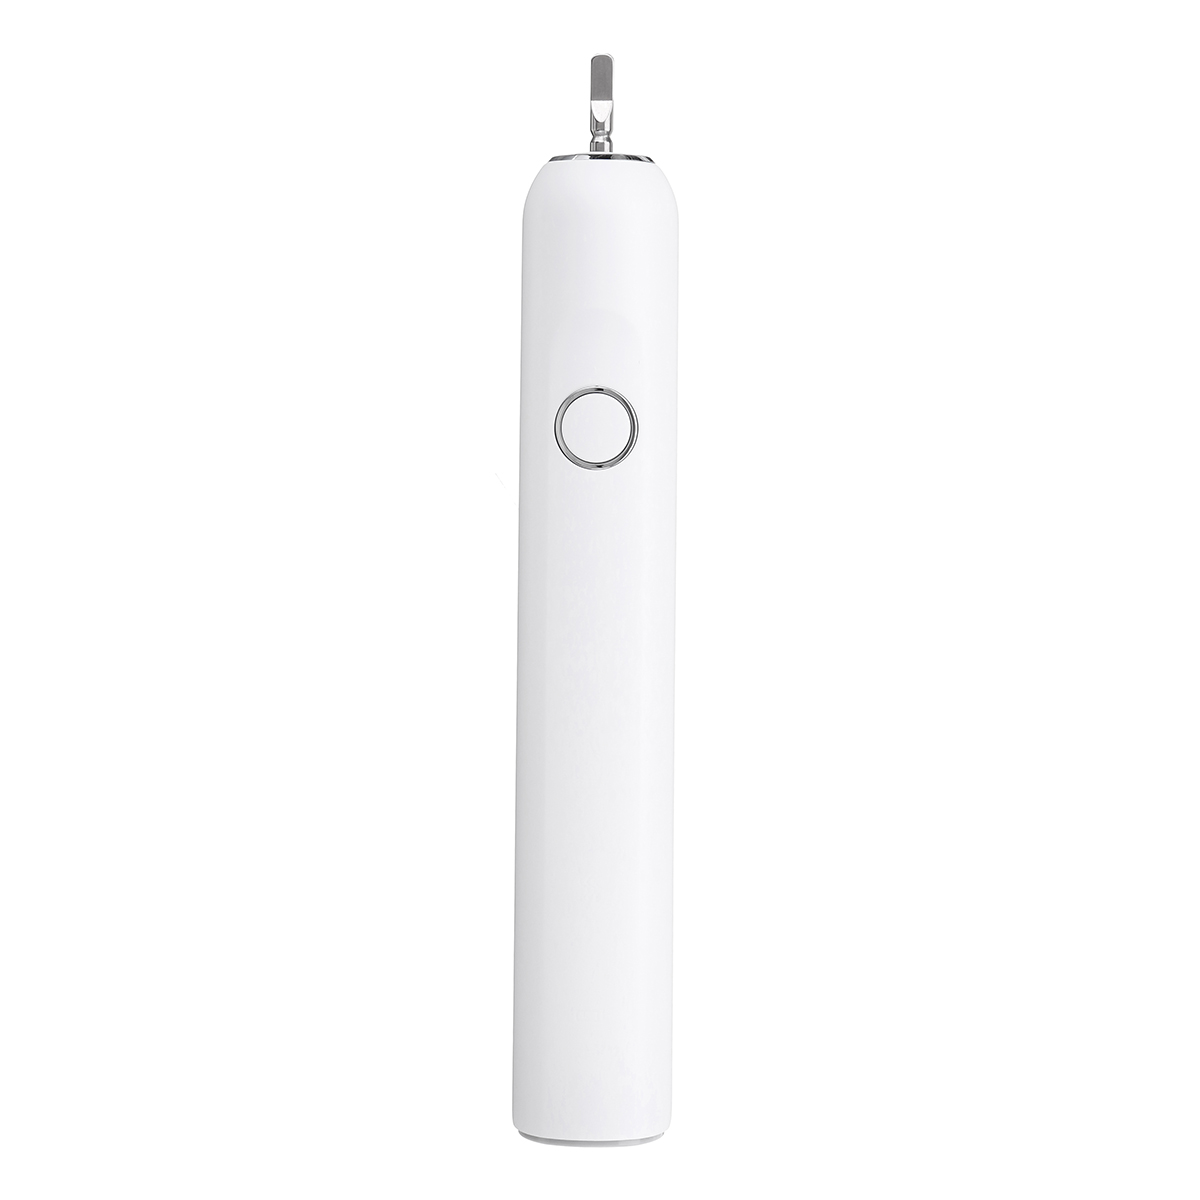 Waterproof-Rechargeable-Sonic-Electrric-Toothbrush-Upgraded-Ultrasonic-Electric-Toothbrush-1361114-8